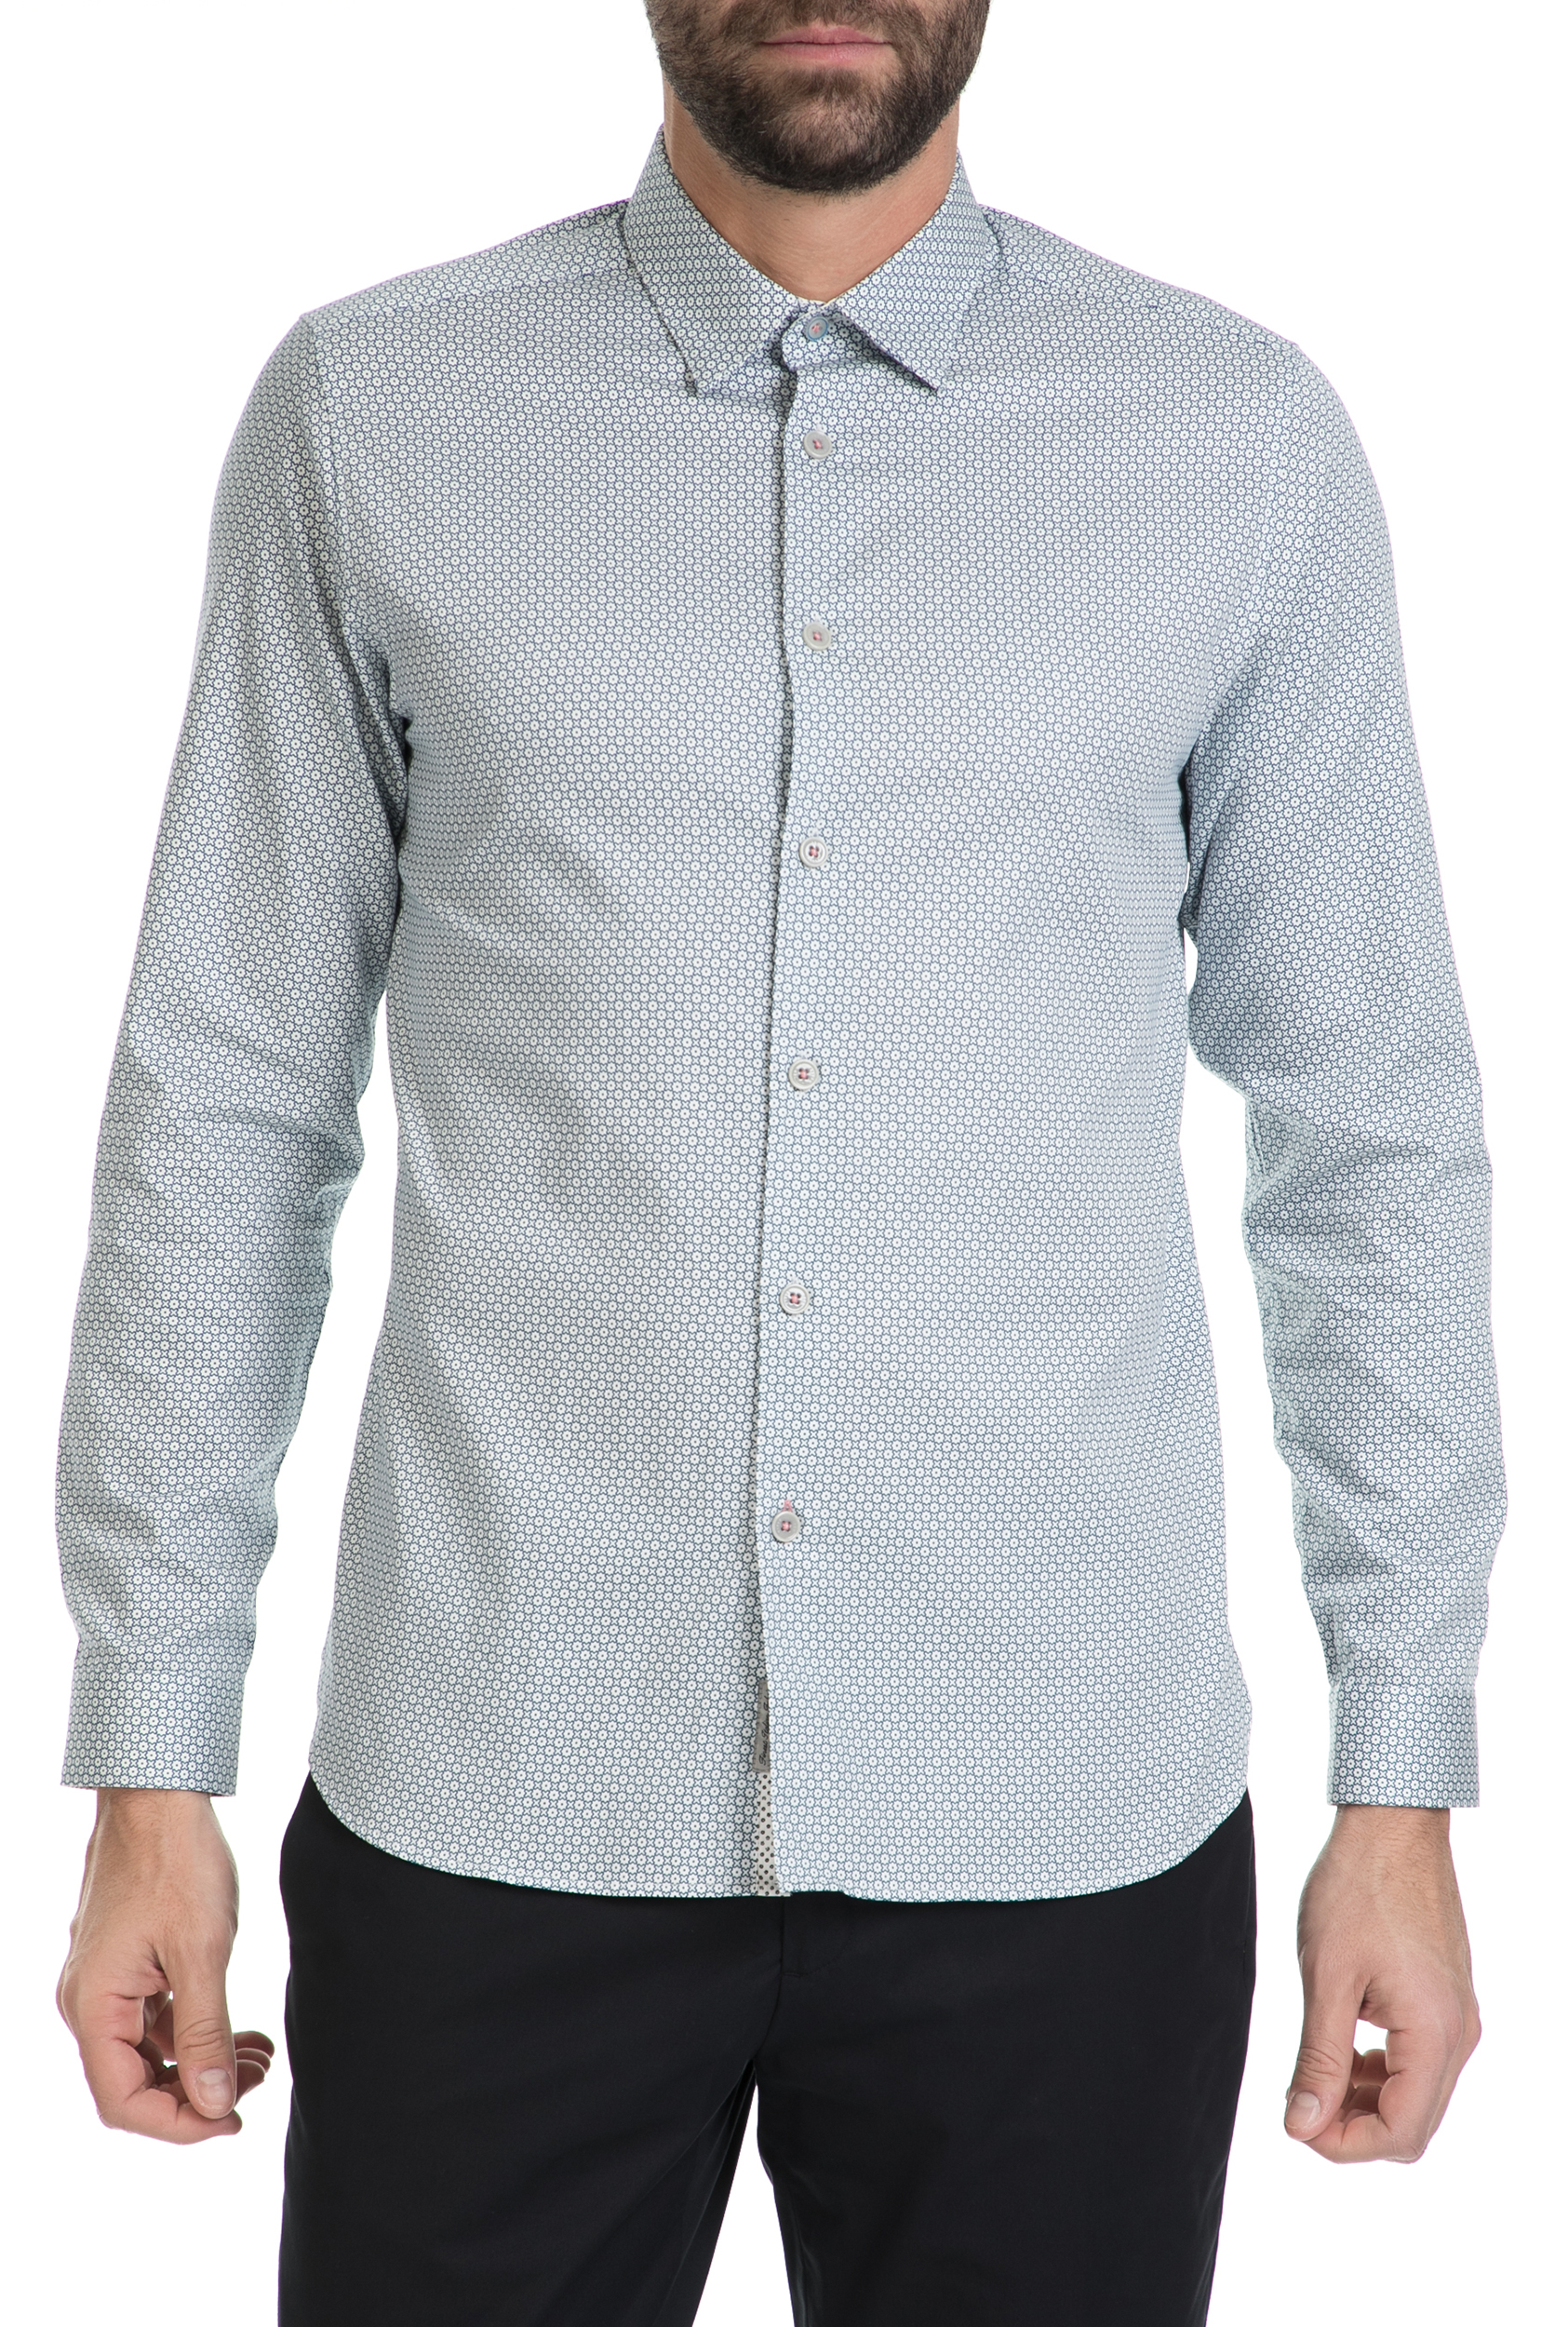 TED BAKER Ανδρικό μακρυμάνικο πουκάμισο HOLIC γαλάζιο με μοτίβο